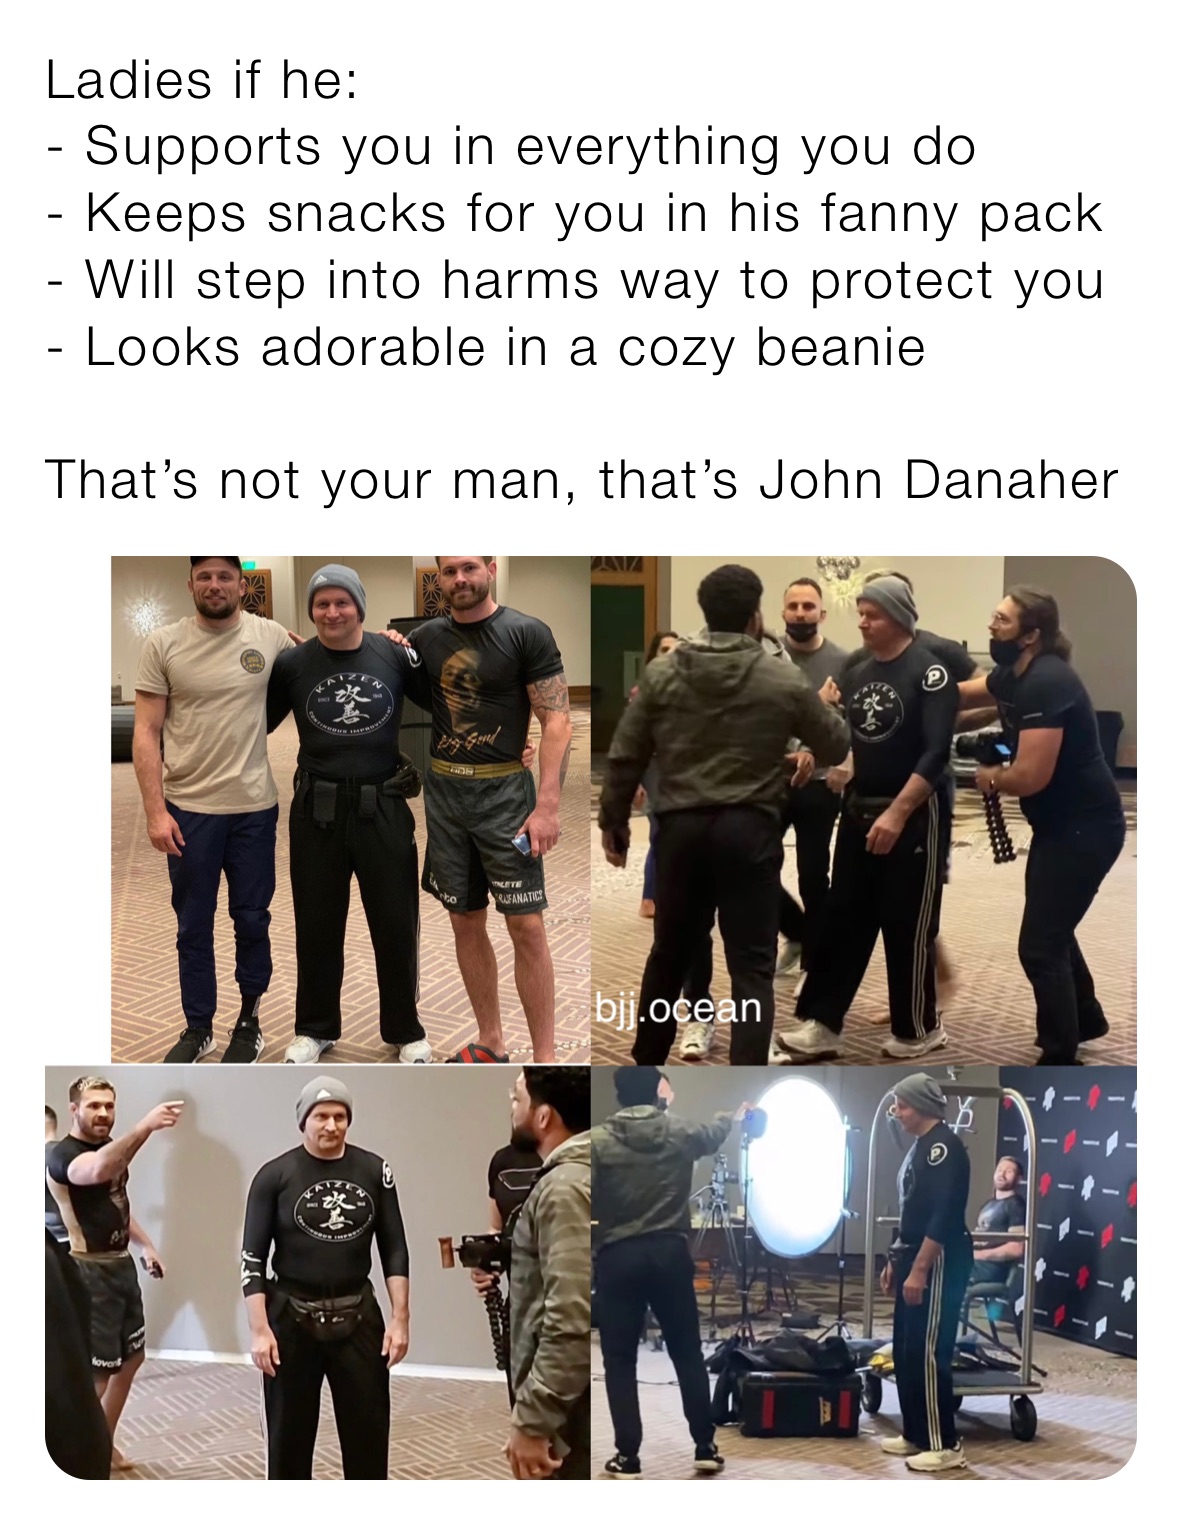 He needs a fanny pack : r/meme